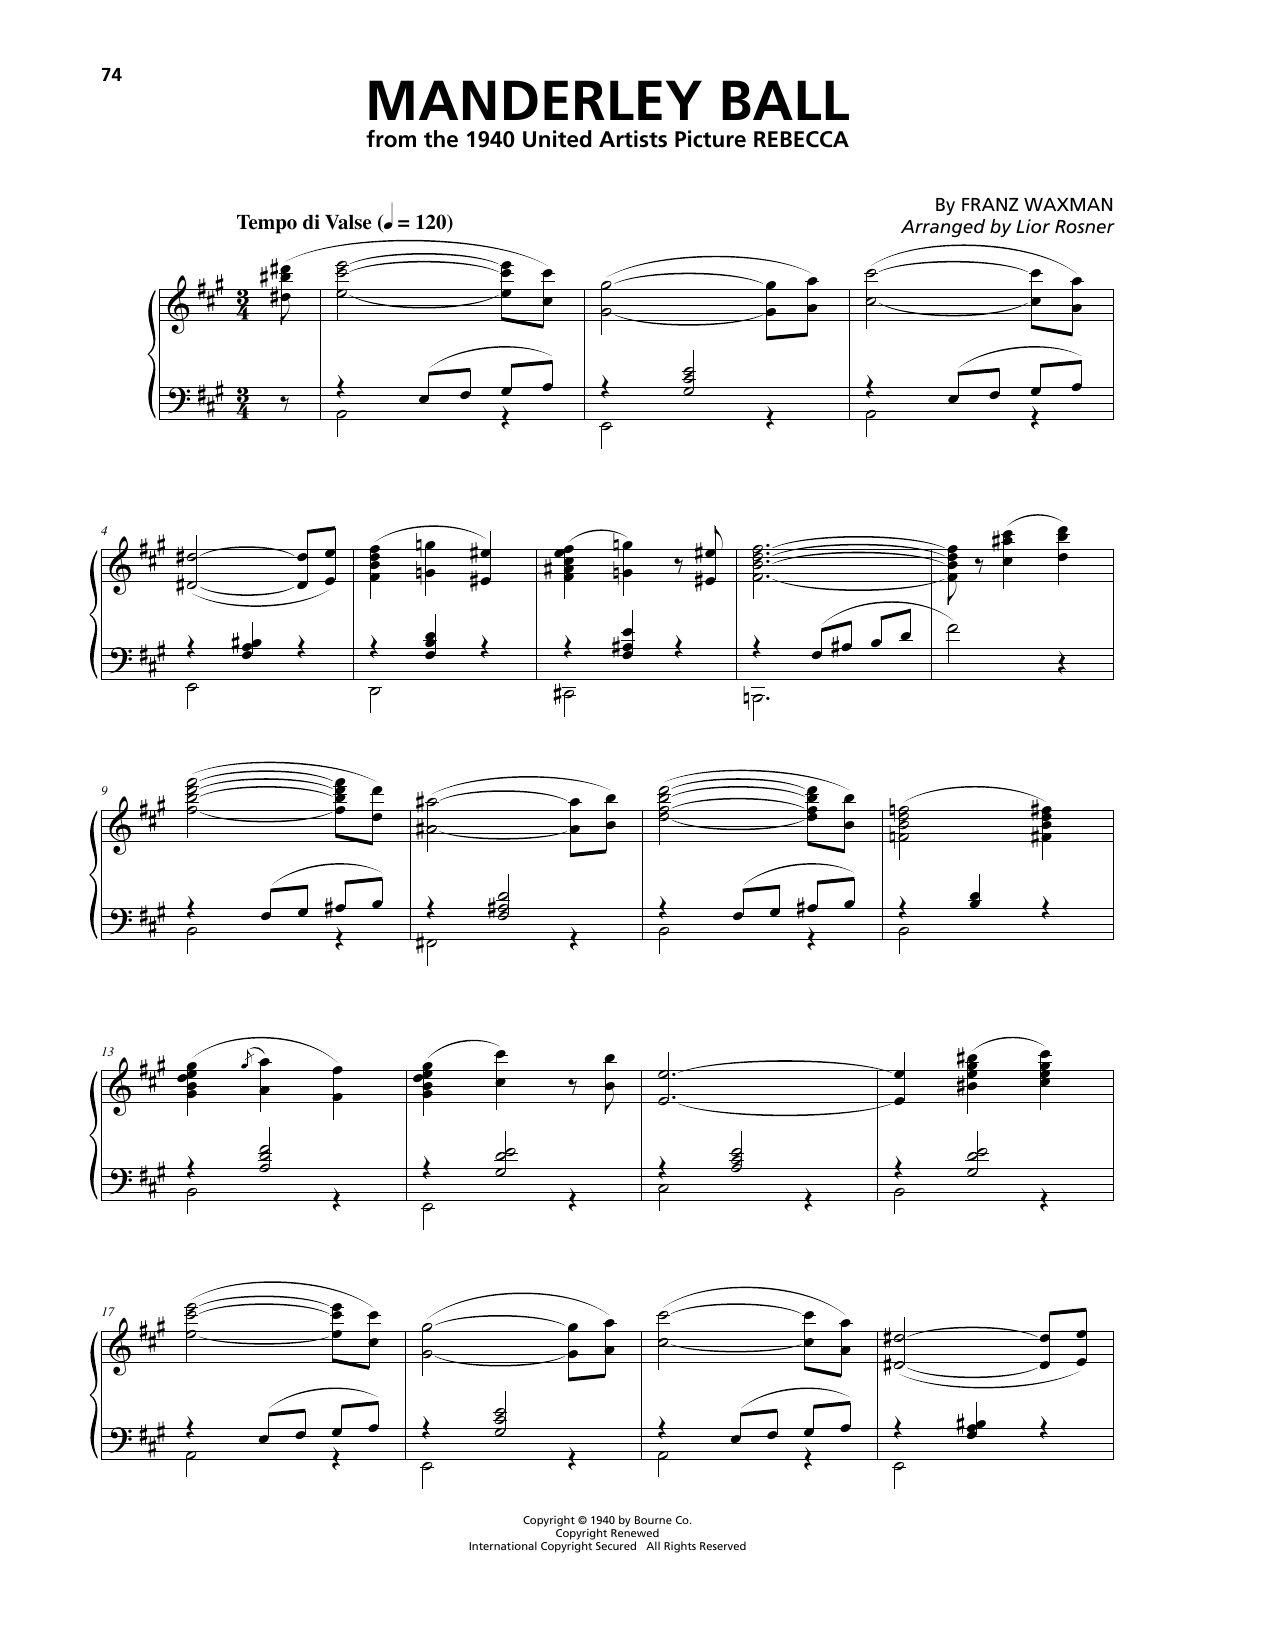 Franz Waxman Manderley Ball Sheet Music Notes & Chords for Piano - Download or Print PDF